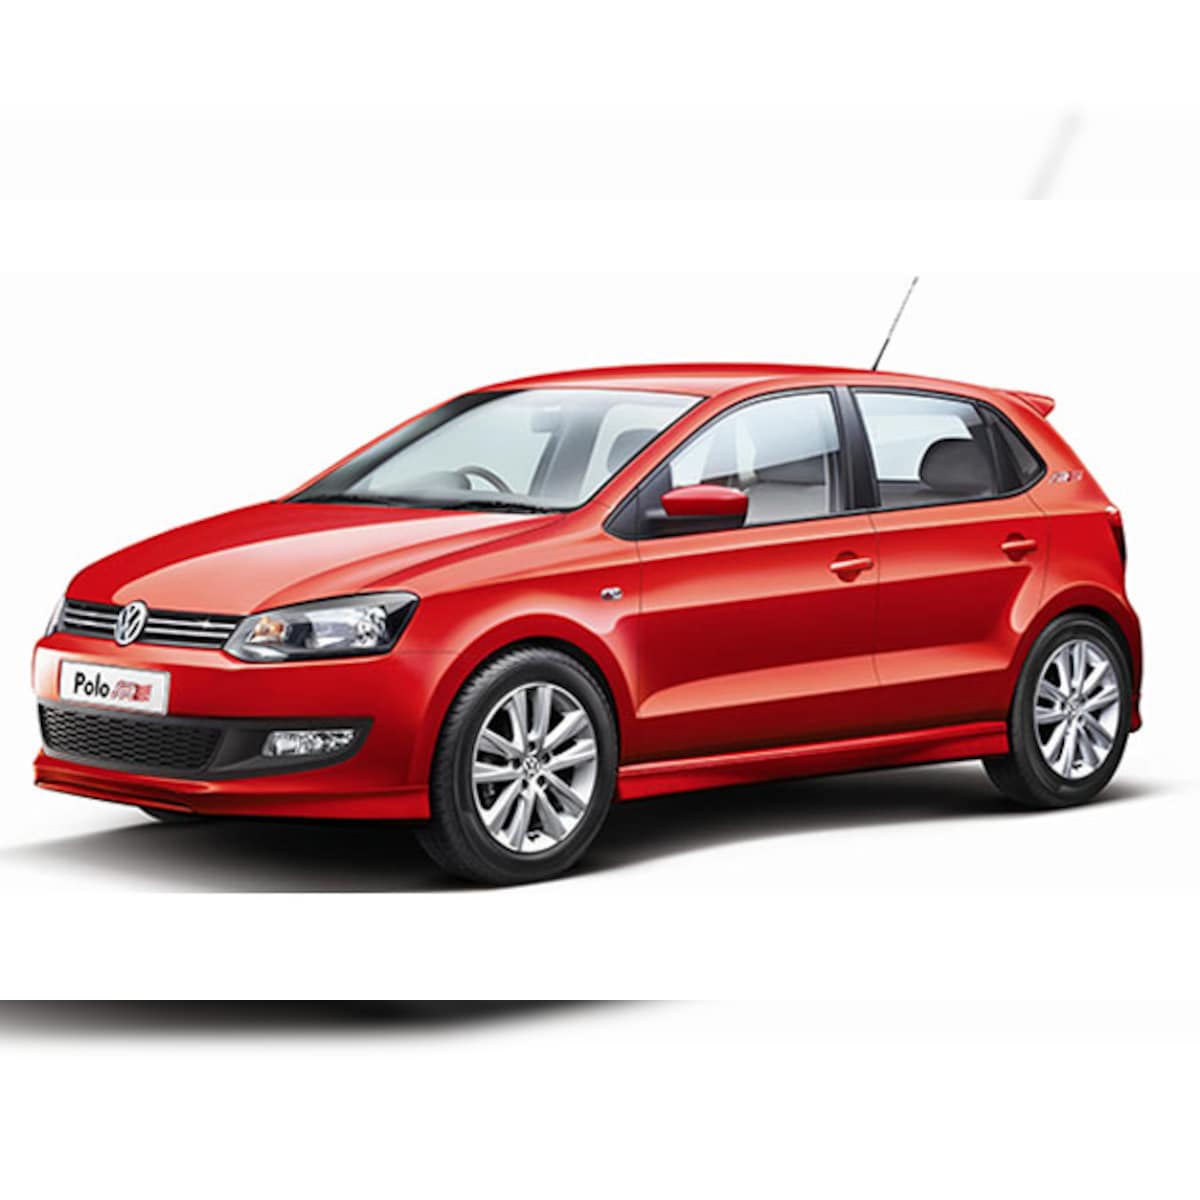 Begrip Onderscheppen Bekritiseren Launched: 2013 Volkswagen Polo SR launched in India at Rs 6.27 lakh